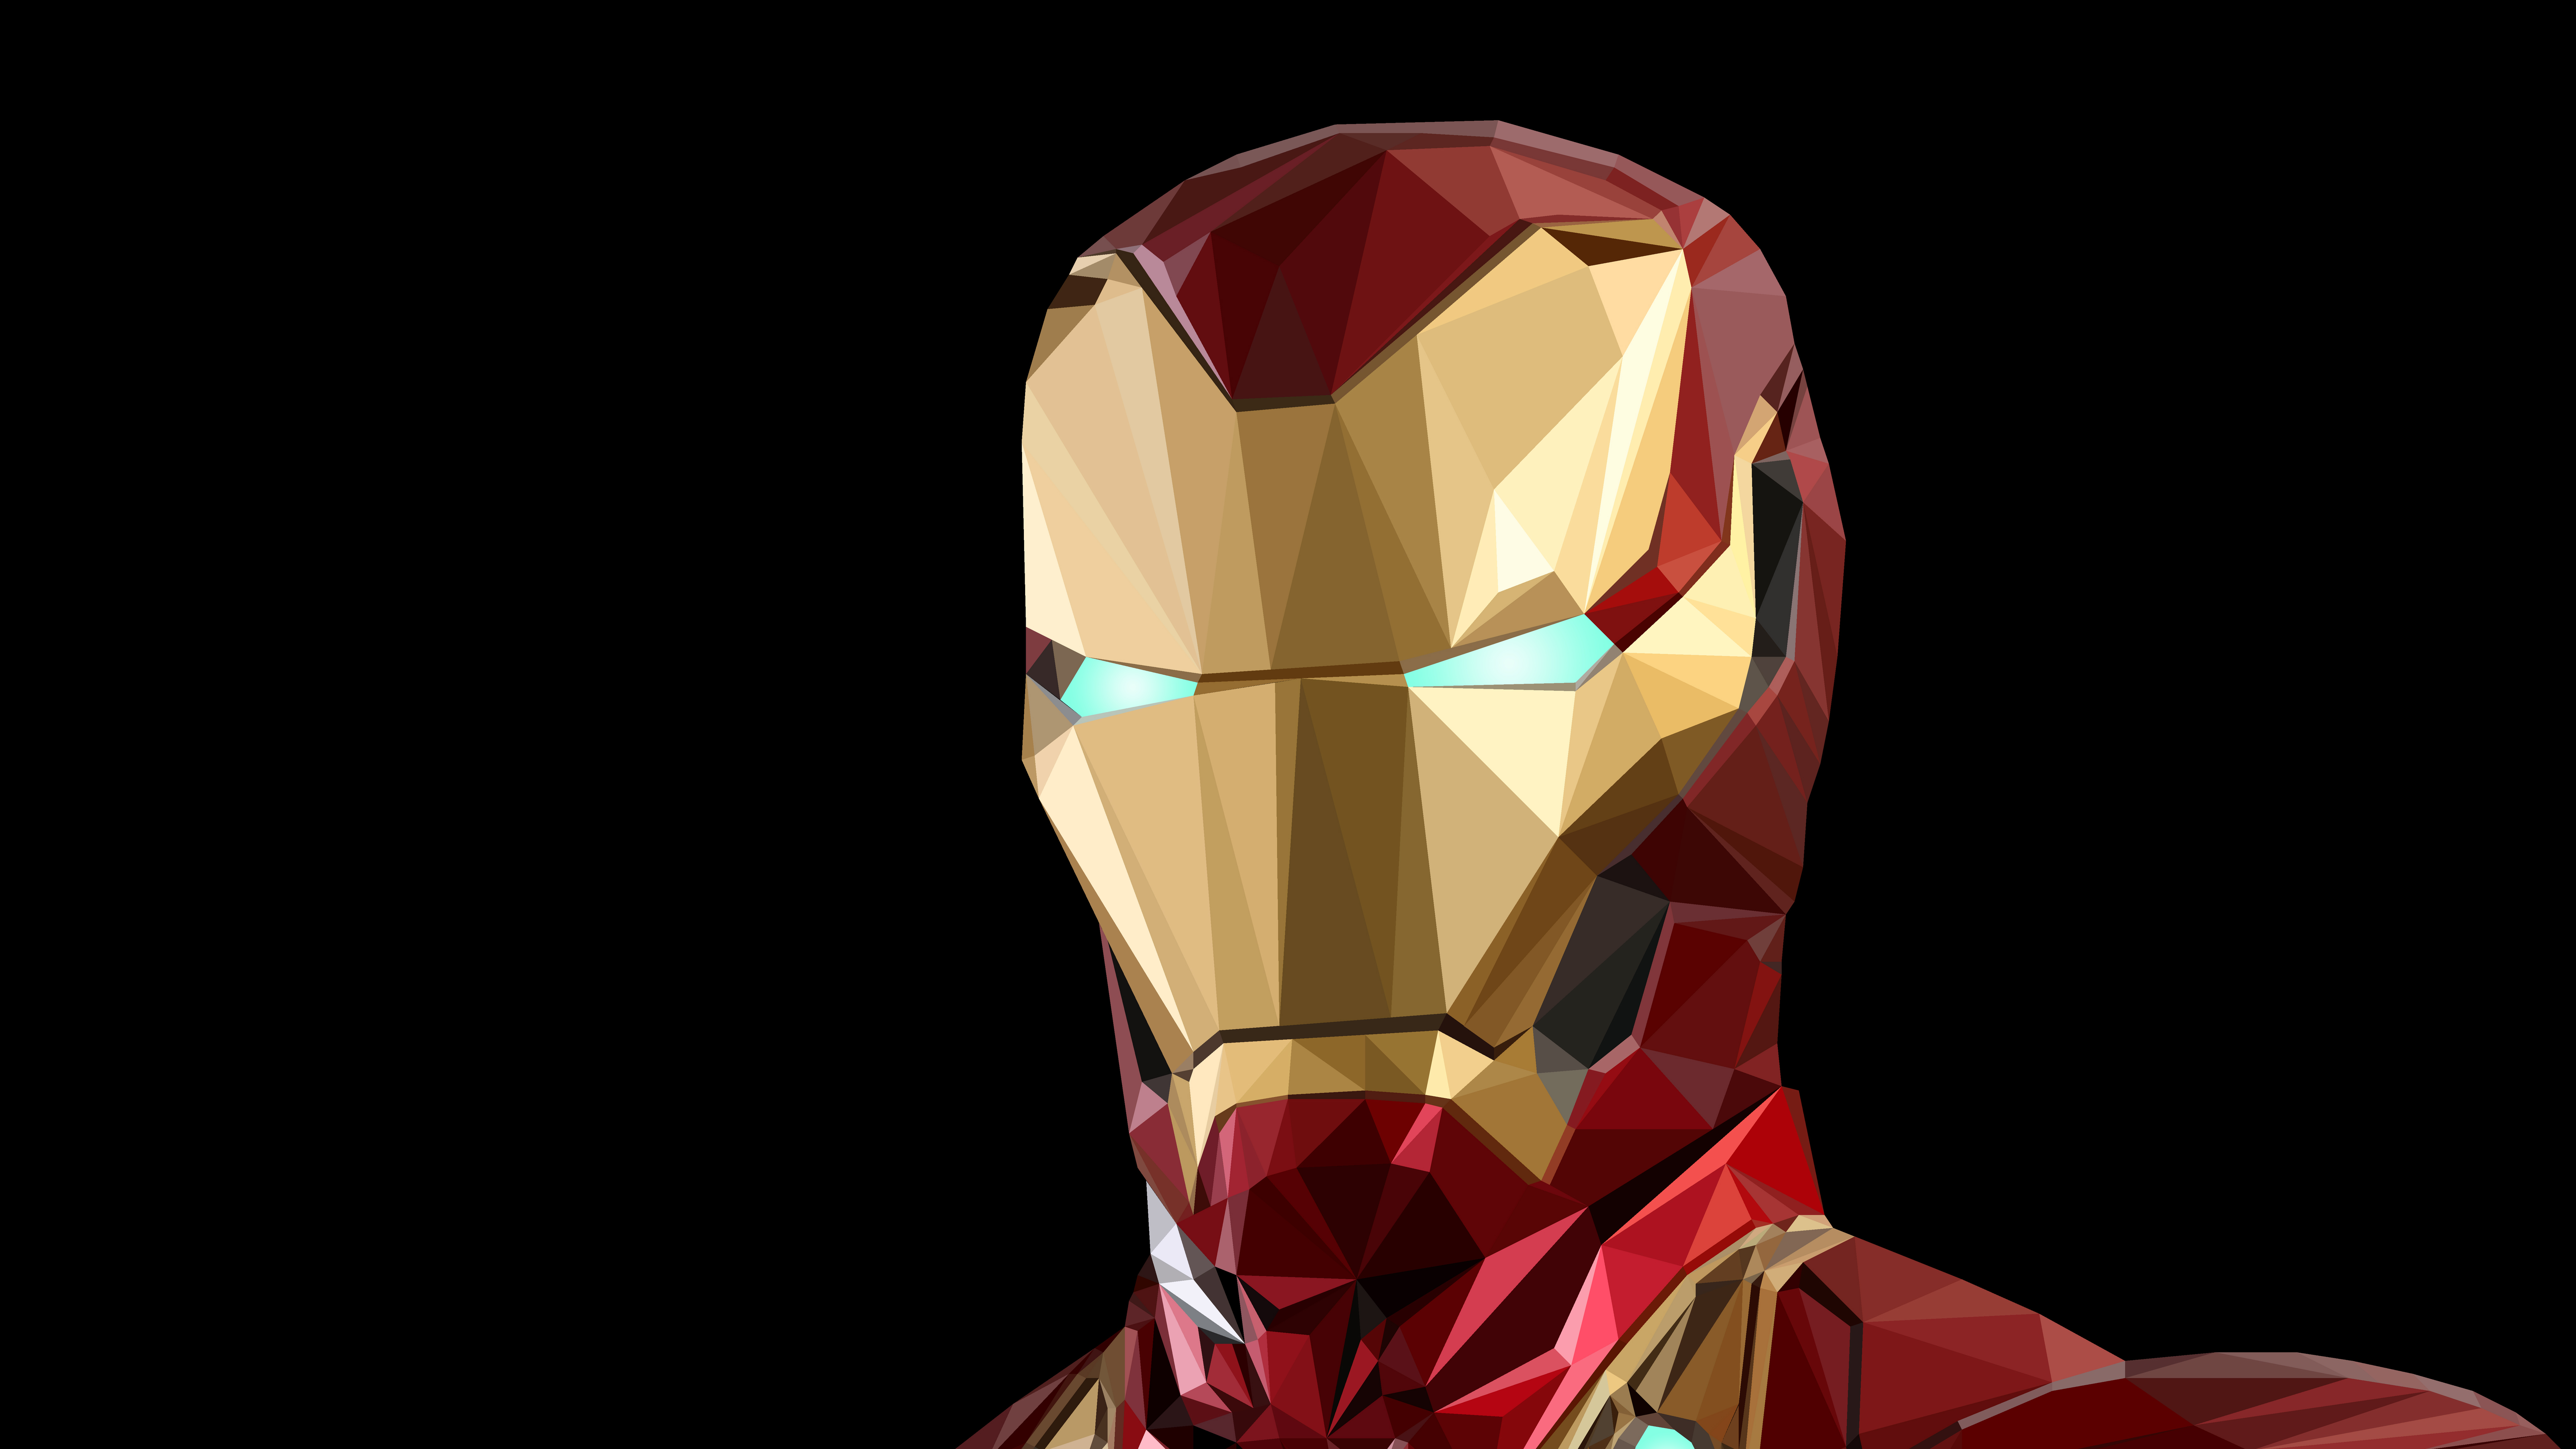 Iron Man Oled 8k, HD Superheroes, 4k Wallpaper, Image, Background